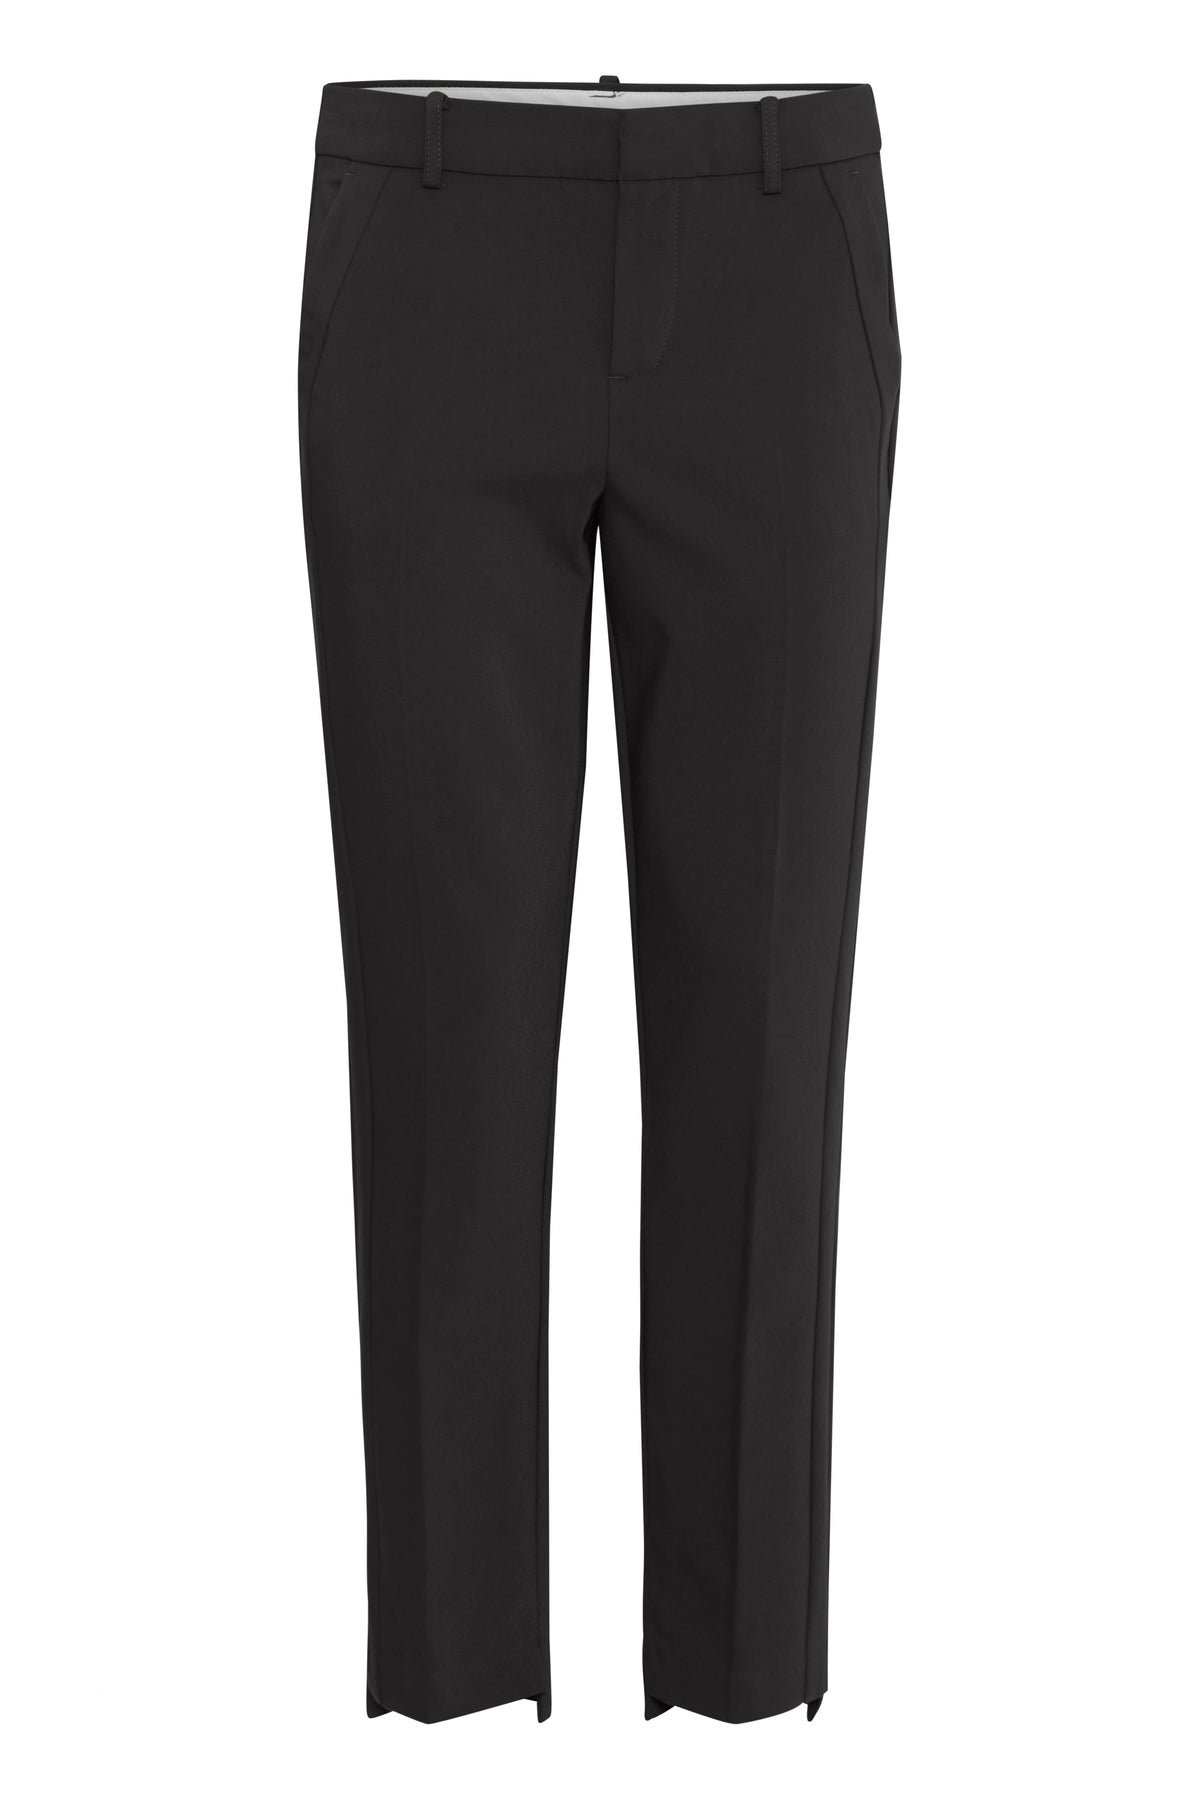 Fransa Tessa Black Slim Leg Cigarette Trousers, 20611257 – Ruby 67 Boutique